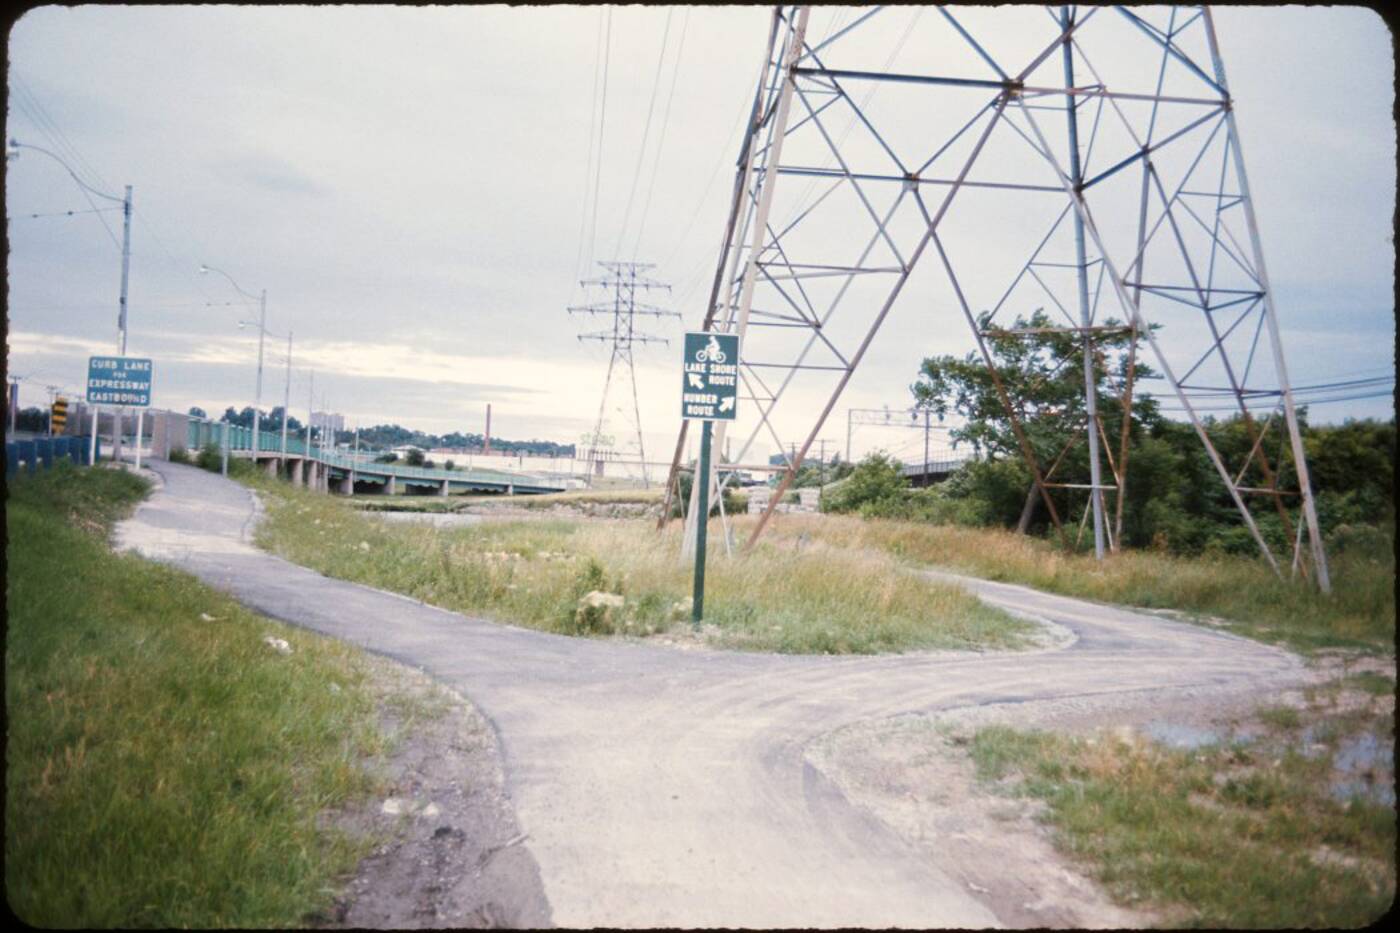 toronto waterfront 1970s